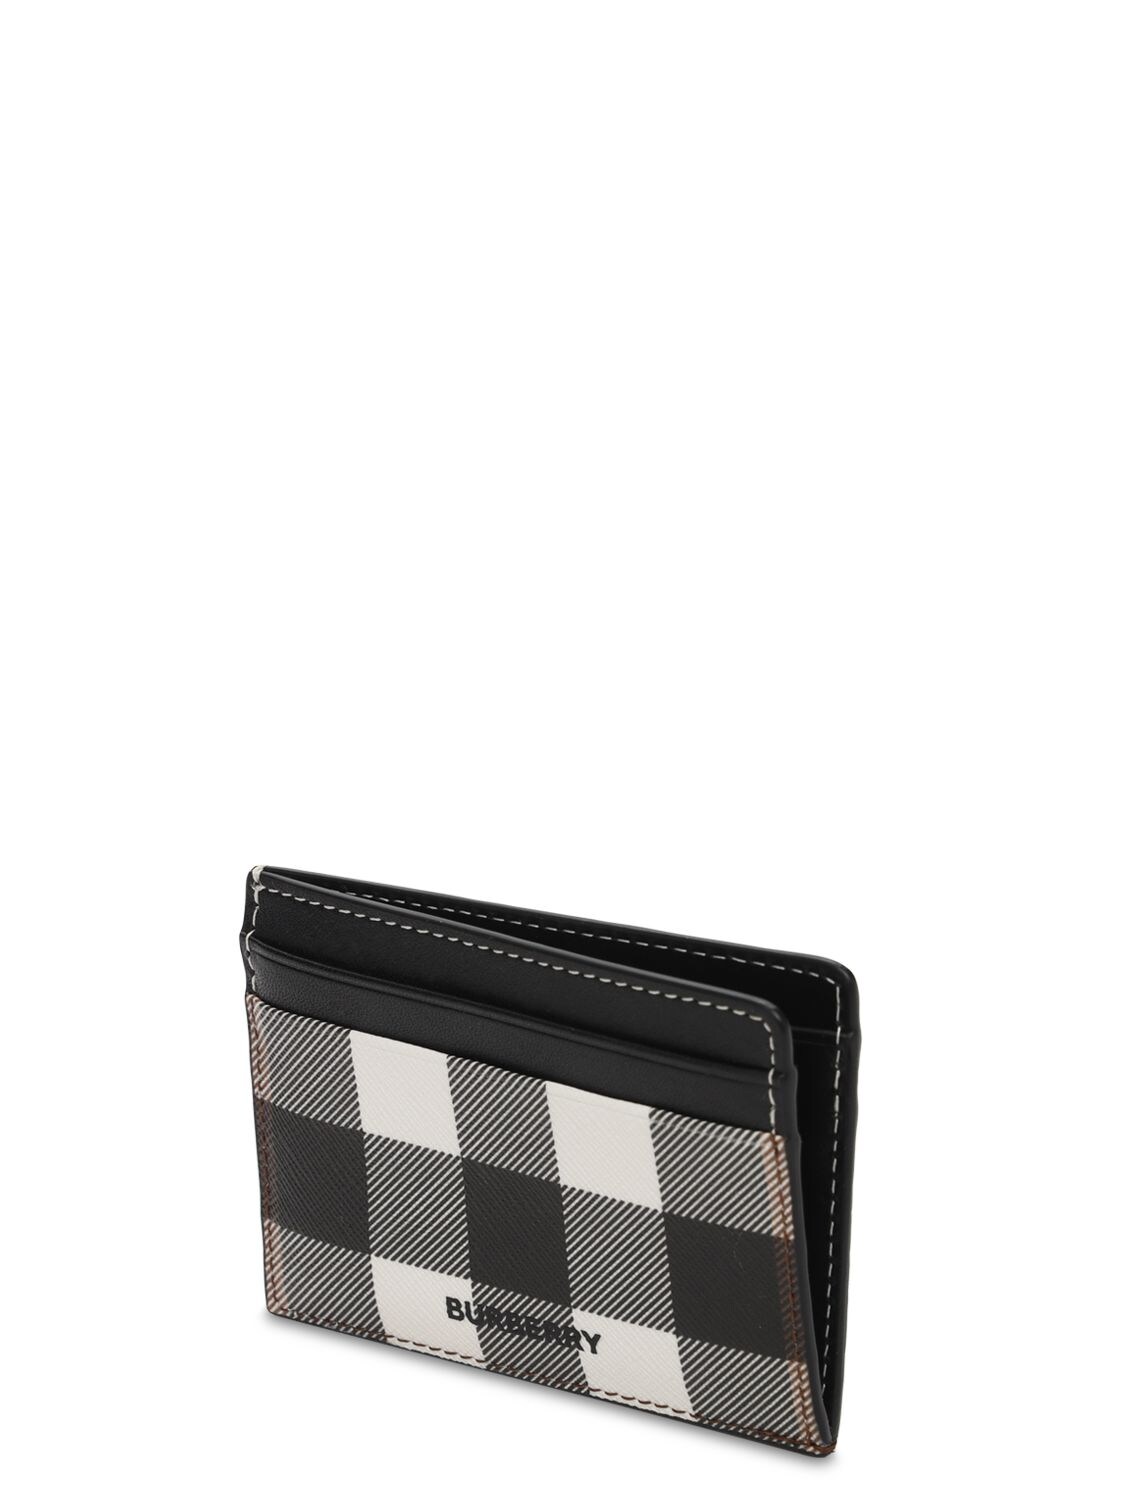 Burberry Black & White E-canvas Check Kier Card Holder In Dark 